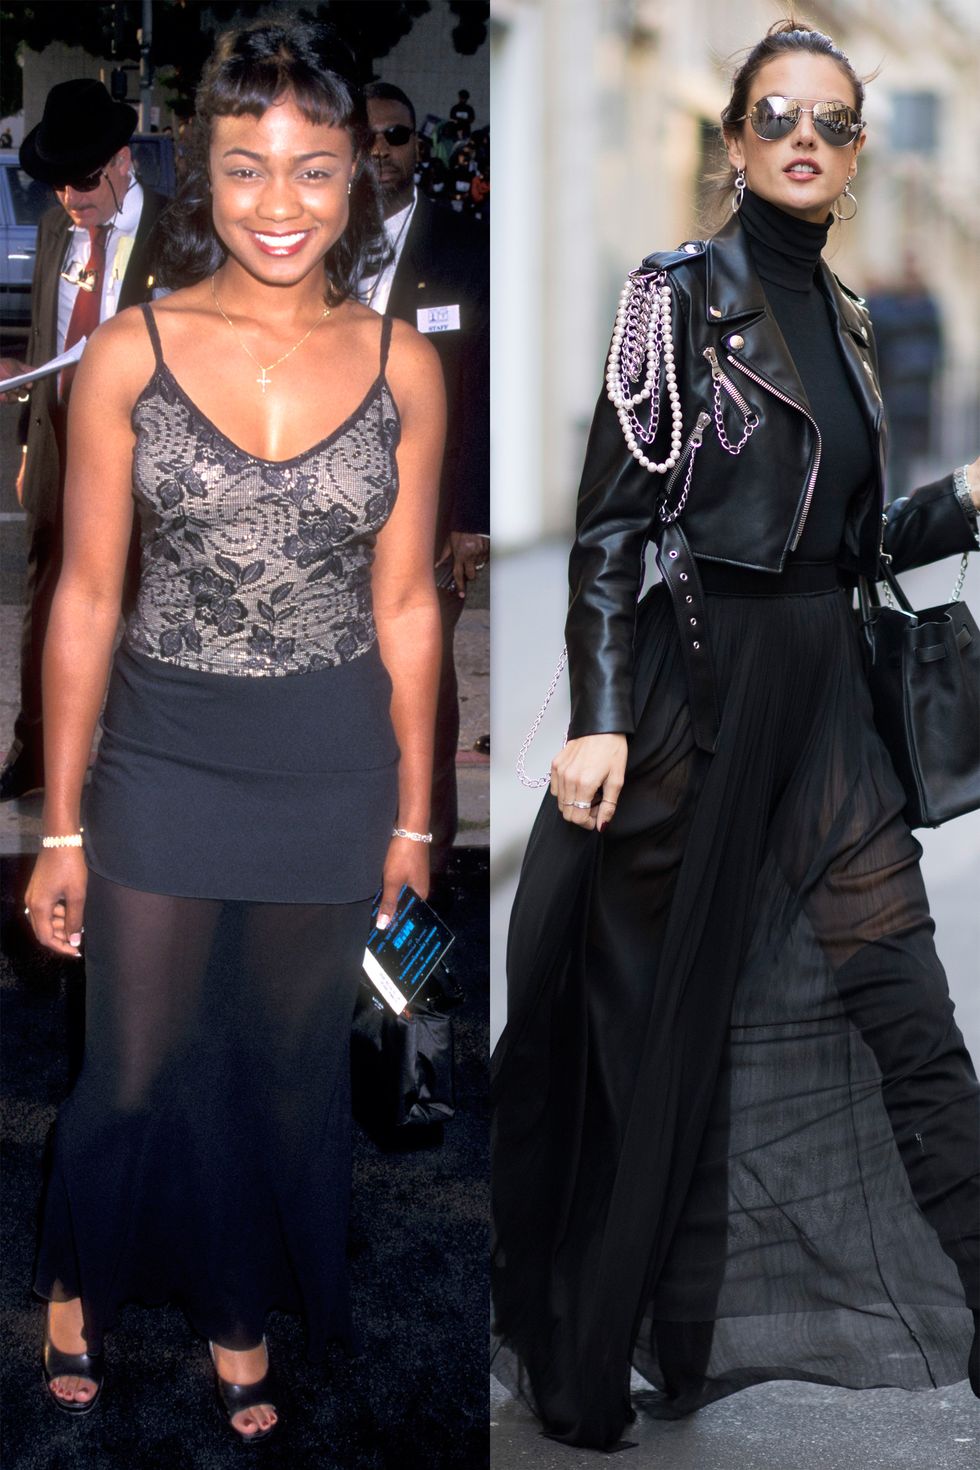 throwback '90s fashion that's still stylish